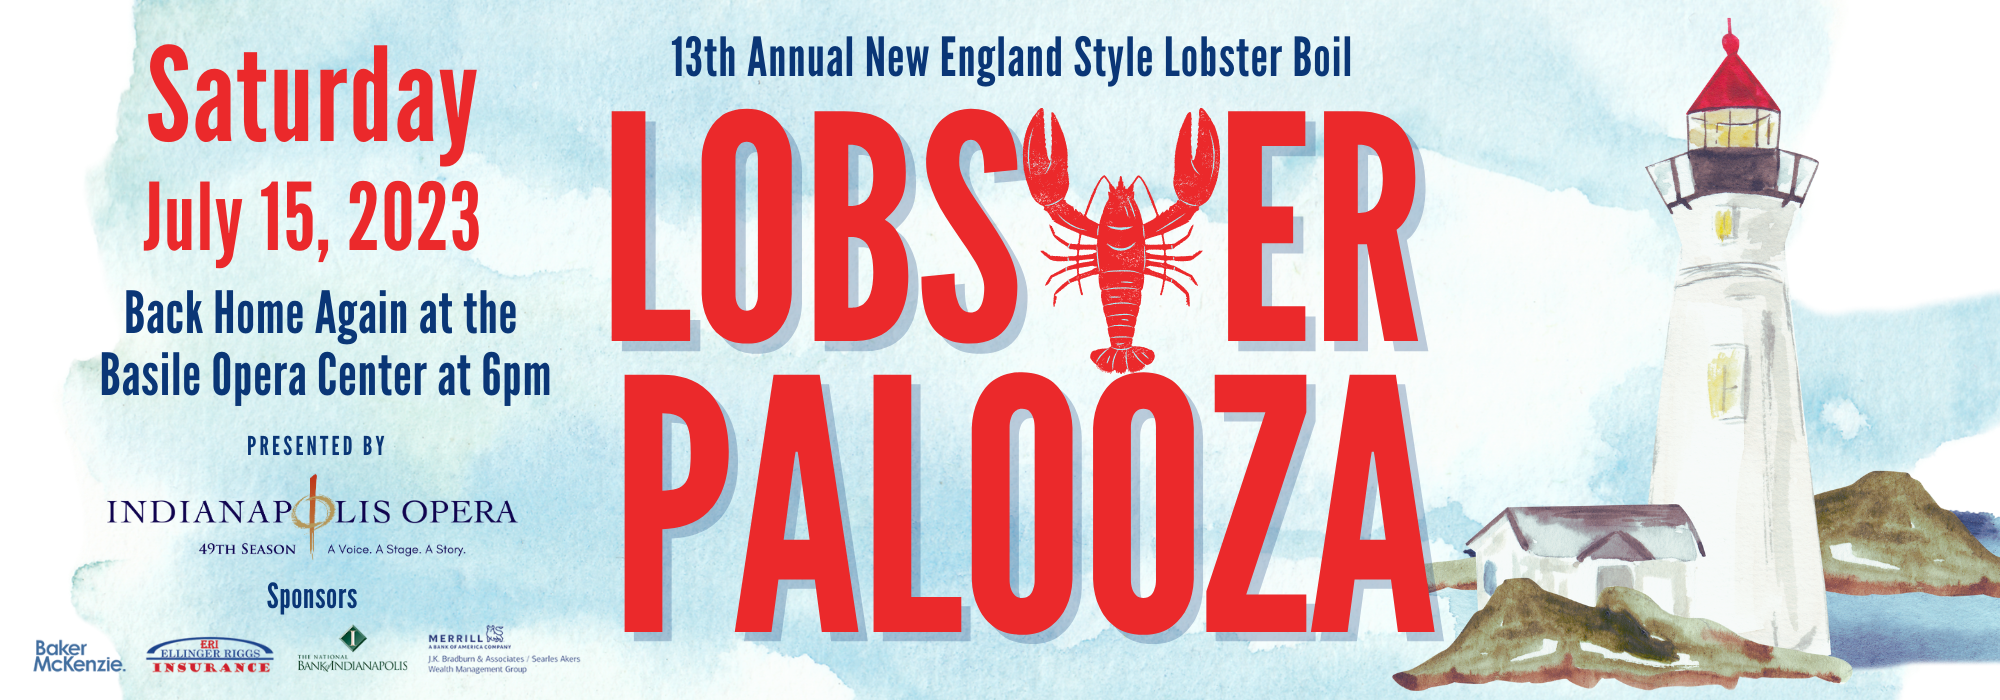 "Lobster Palooza!"